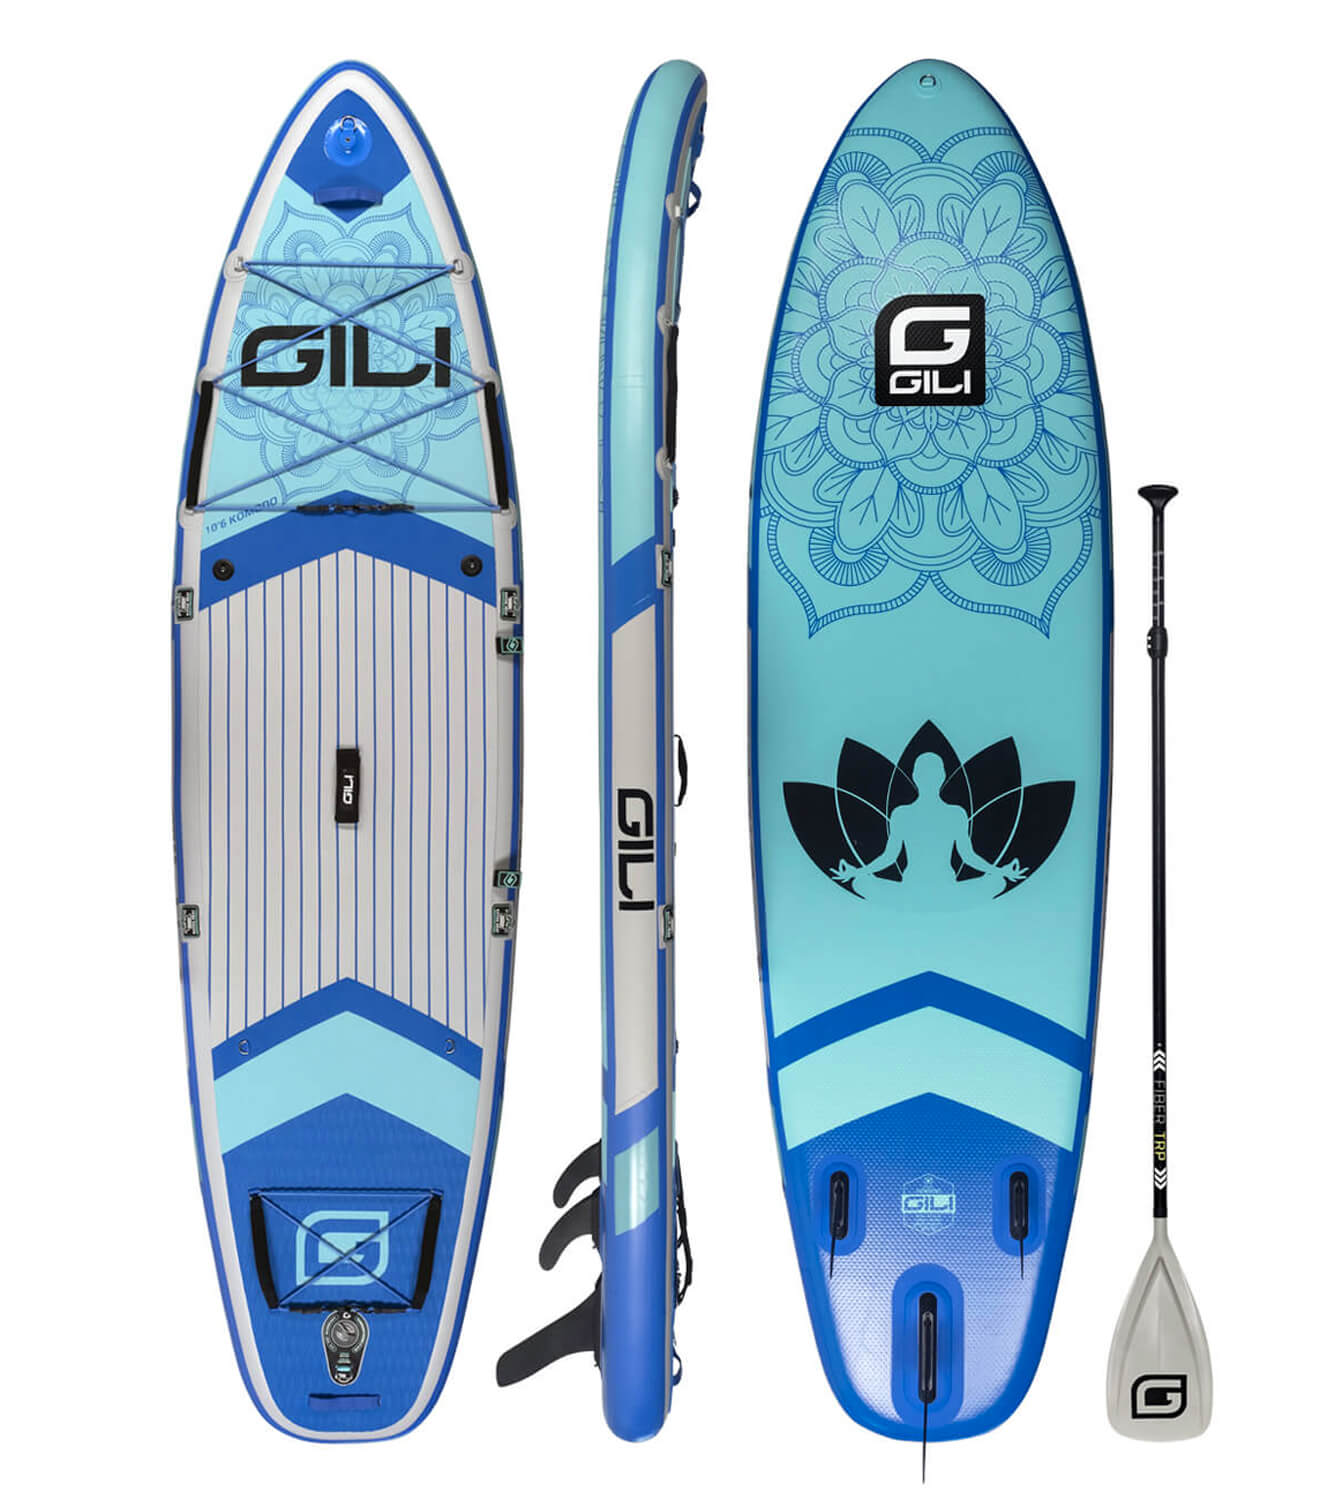 GILI komodo best cheap paddle boards